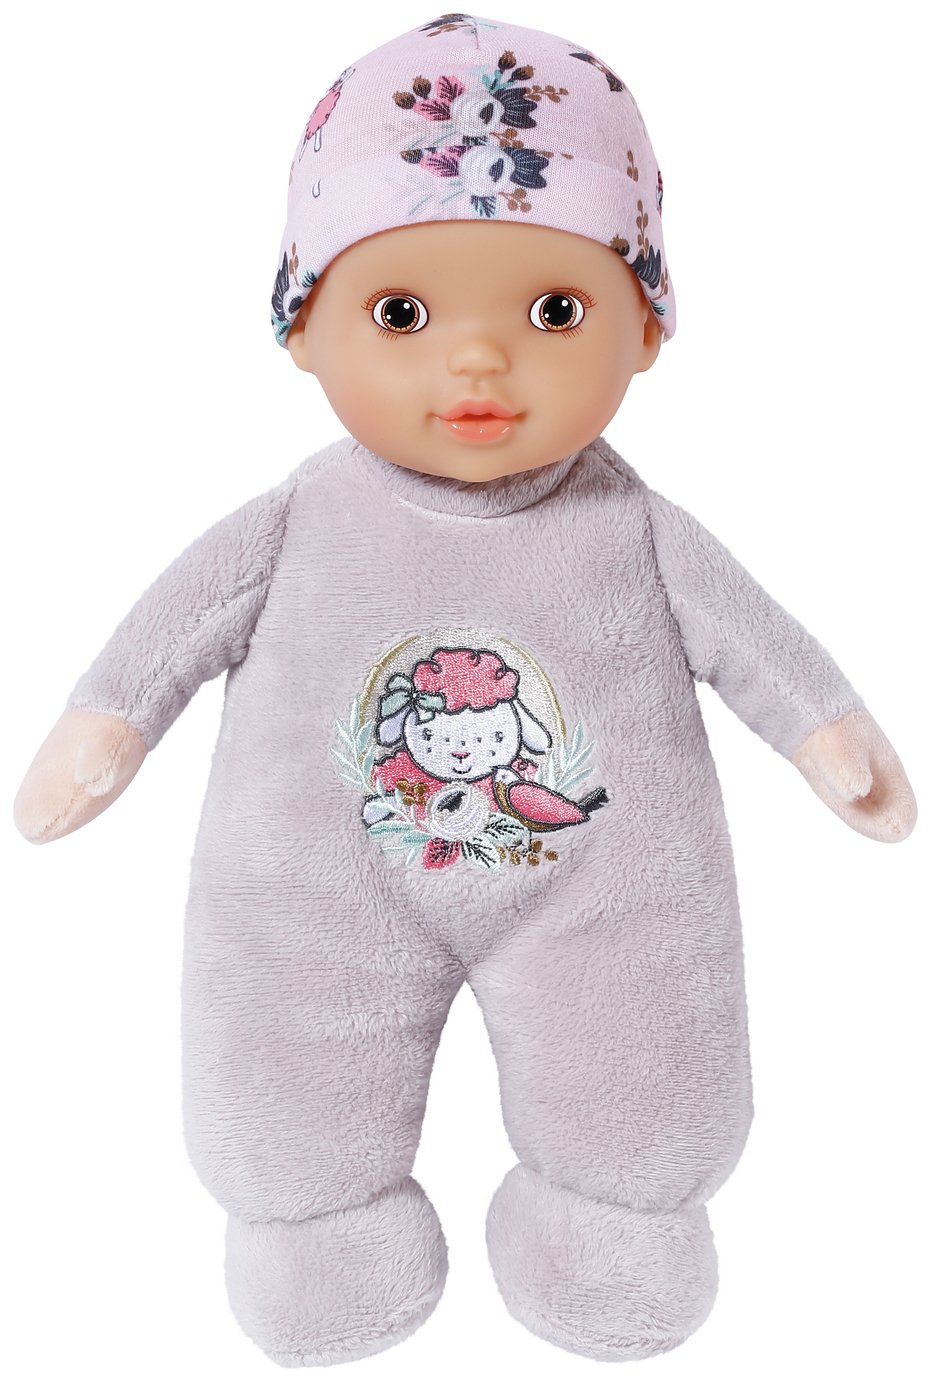 Baby Annabell Dolls Sleep Well Doll - 12inch/30cm